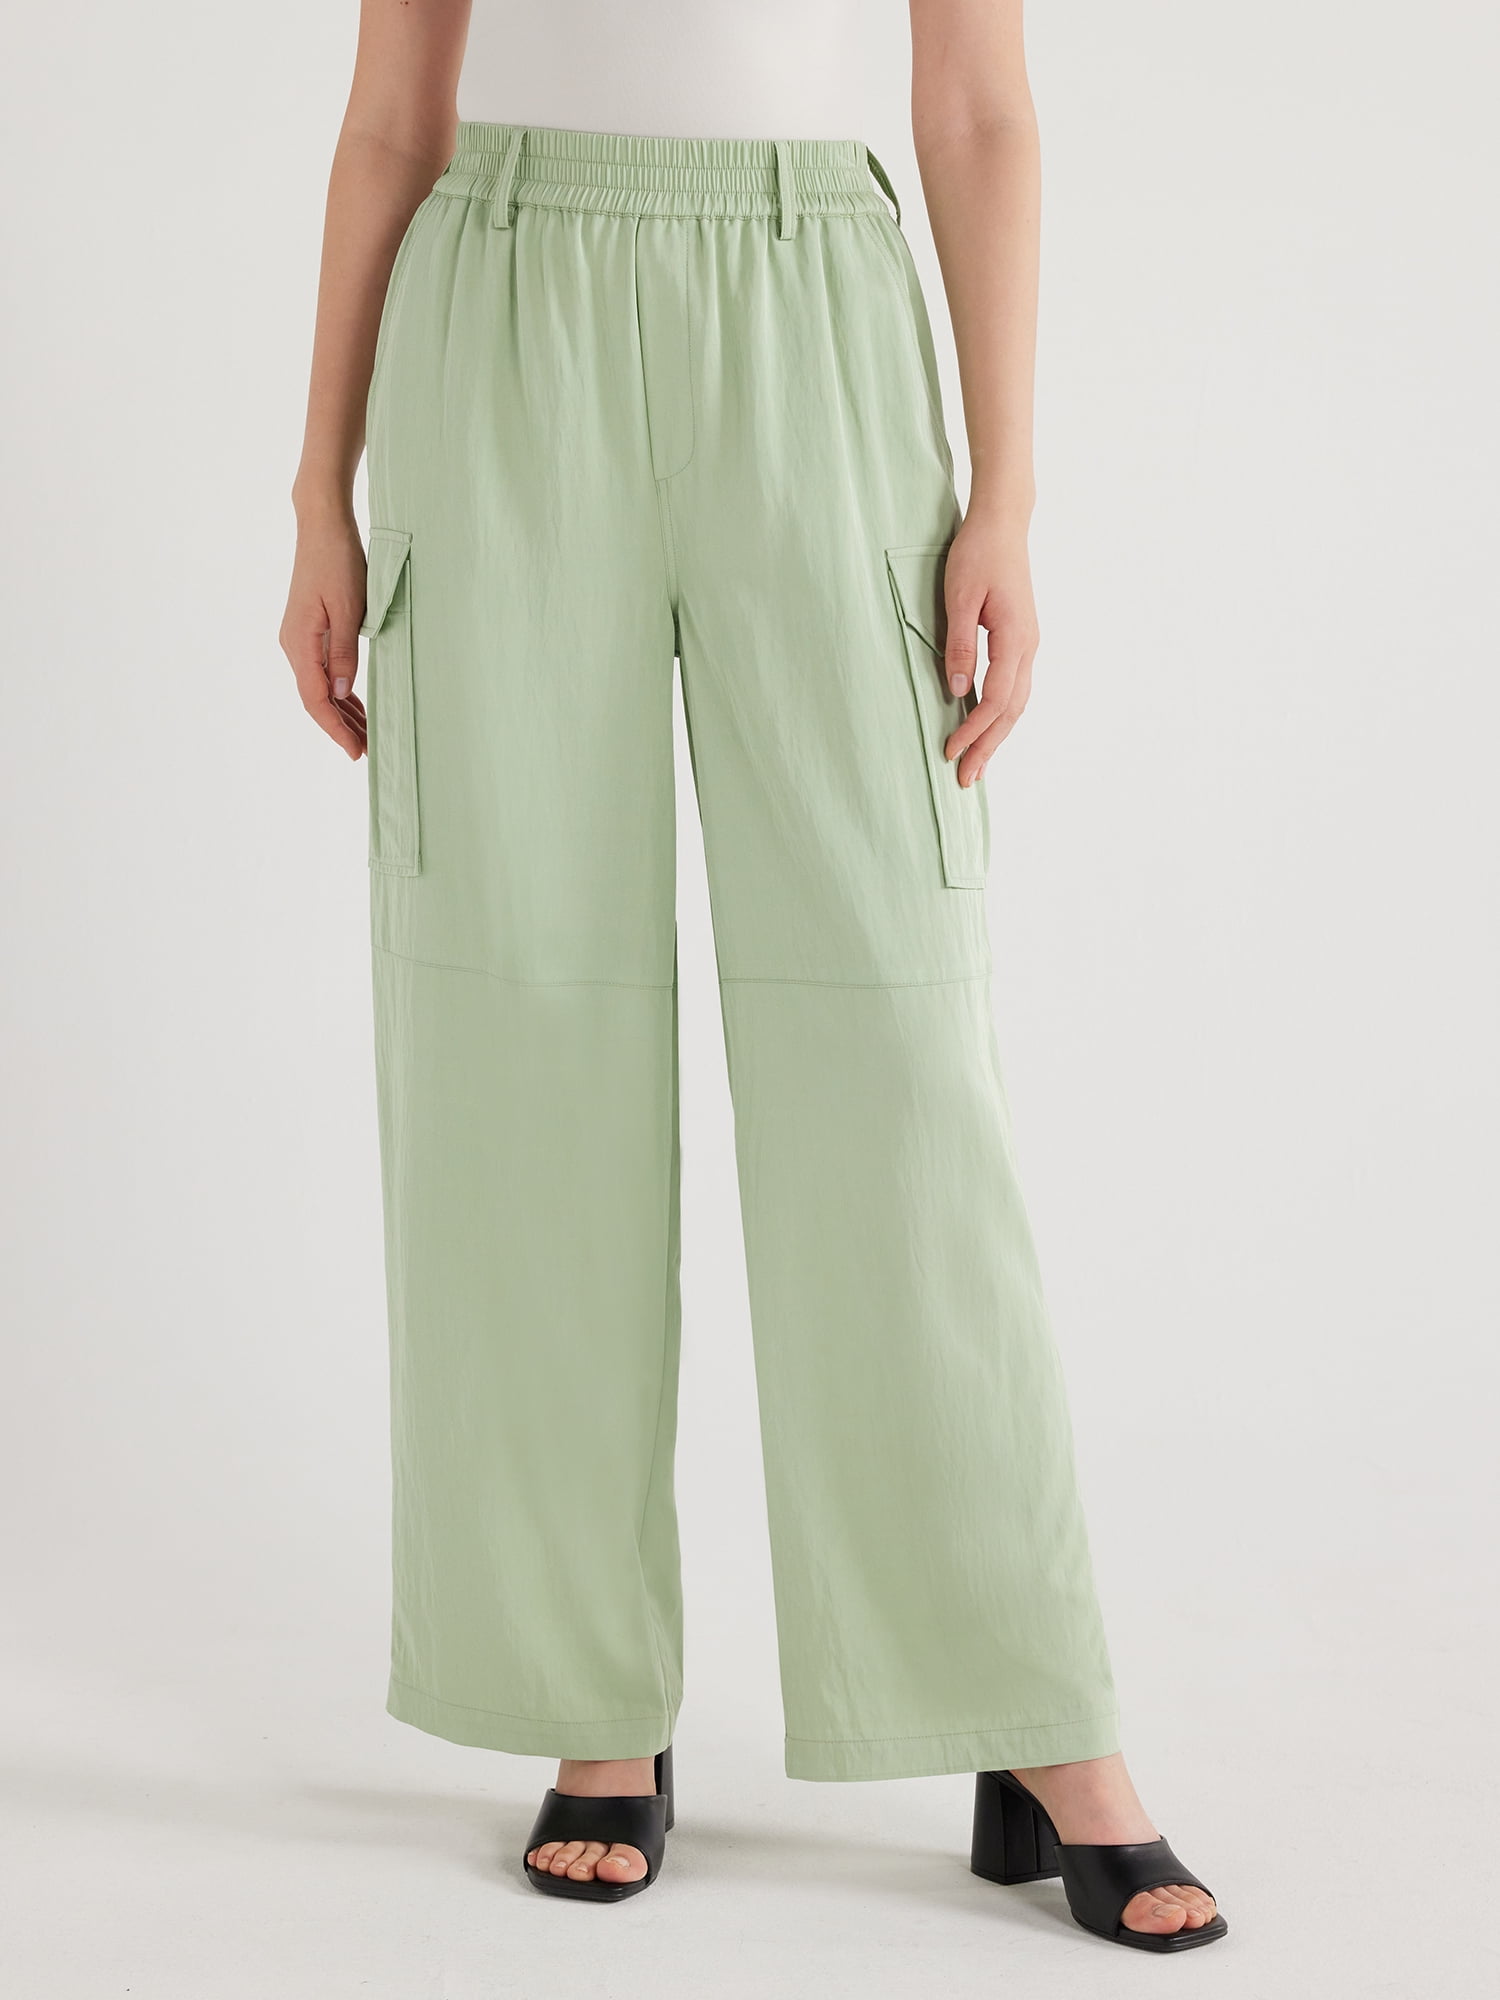 Scoop Women's Cargo Pants, Sizes XS-XXL 